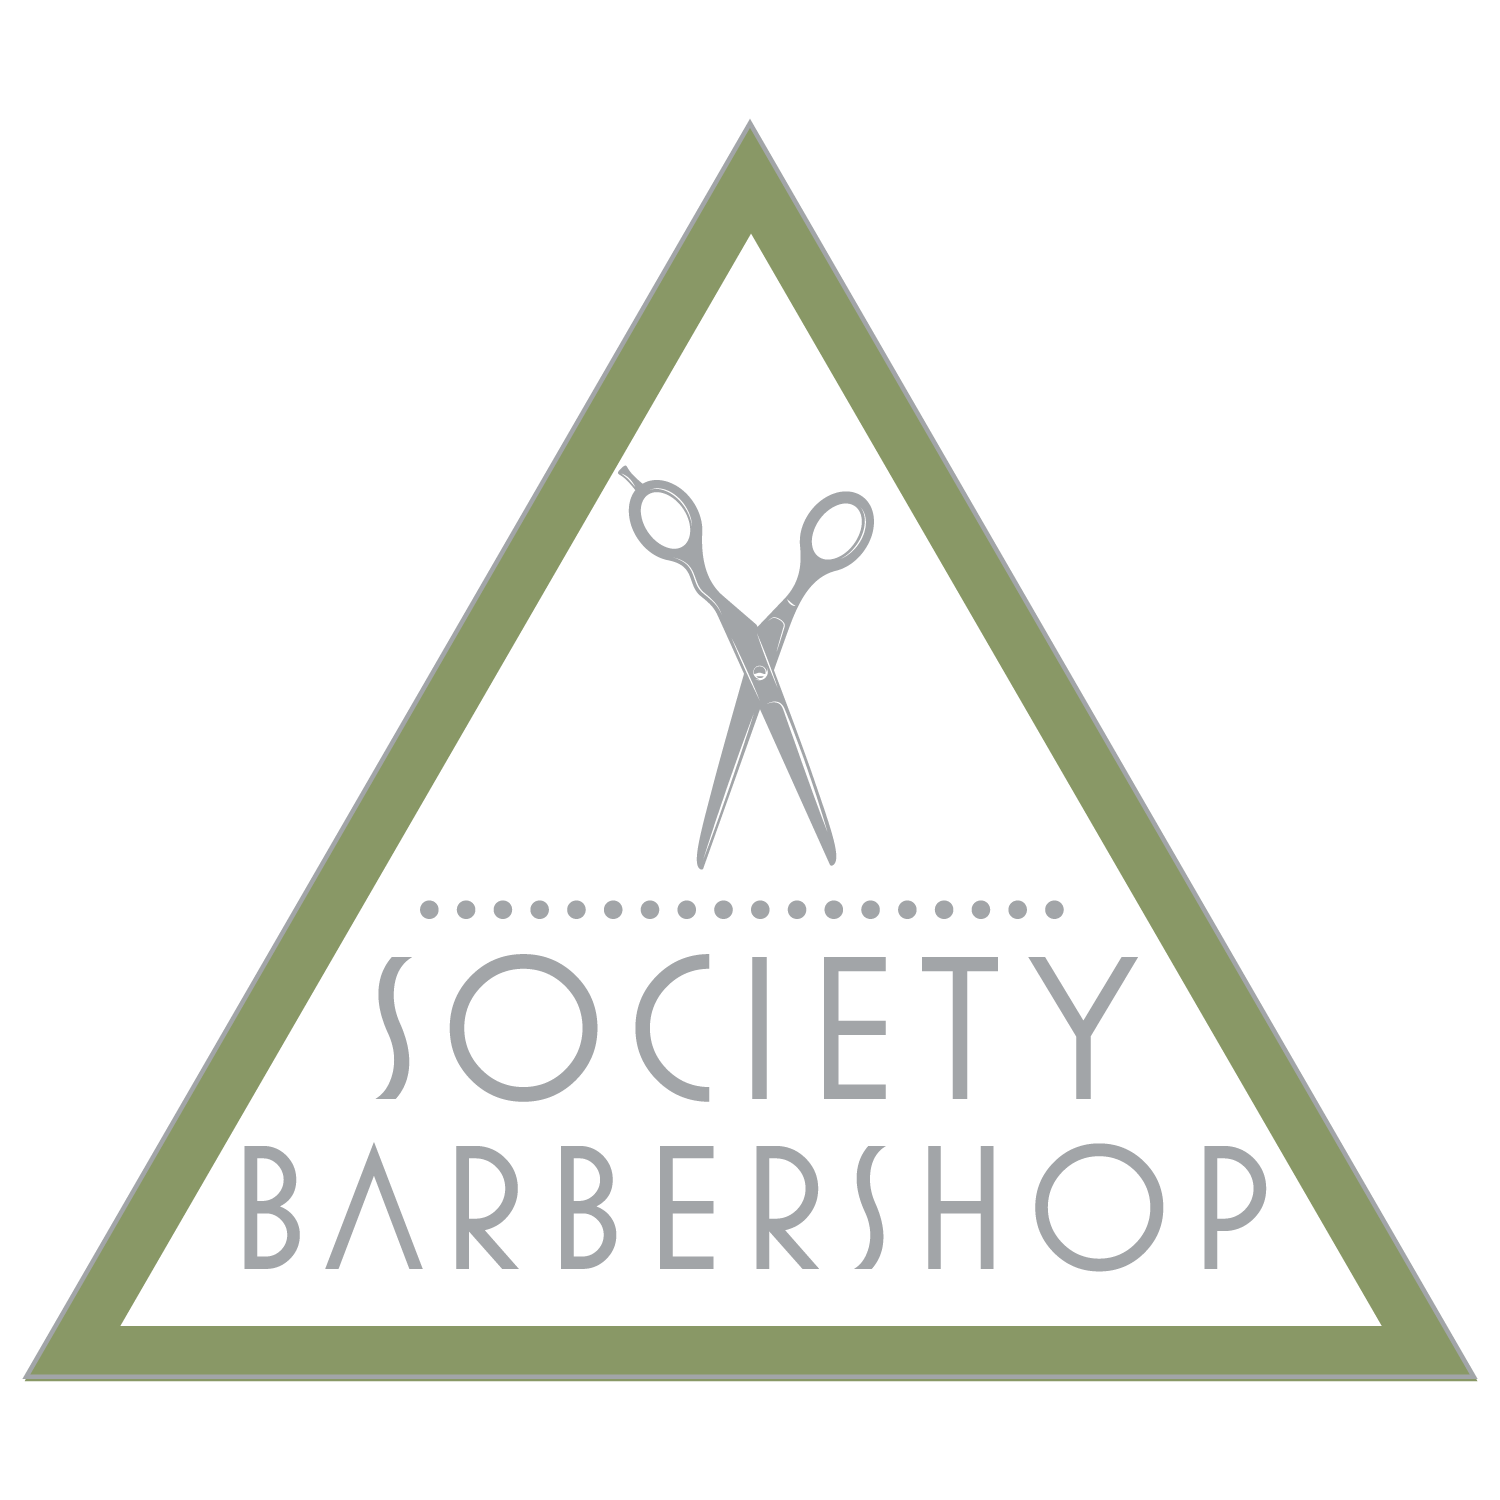 Society Barbershop